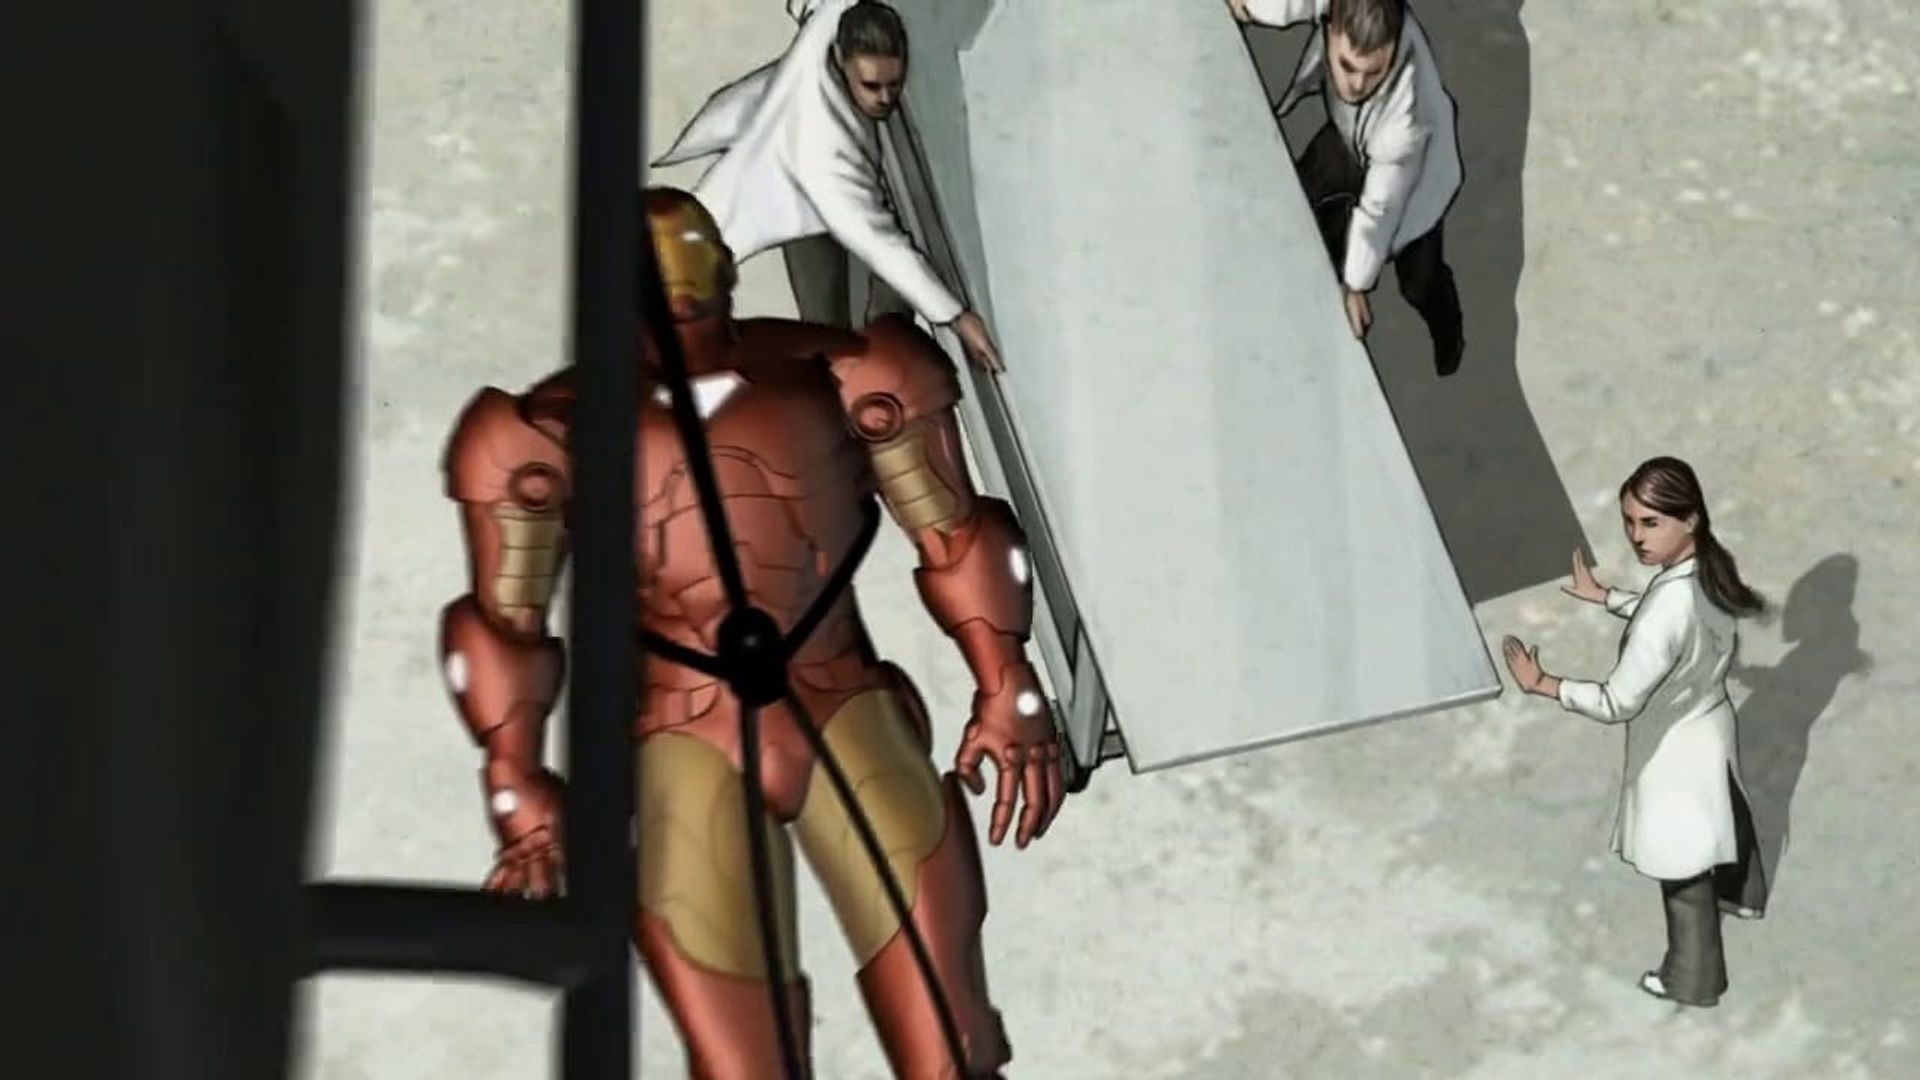 Iron Man: Extremis background